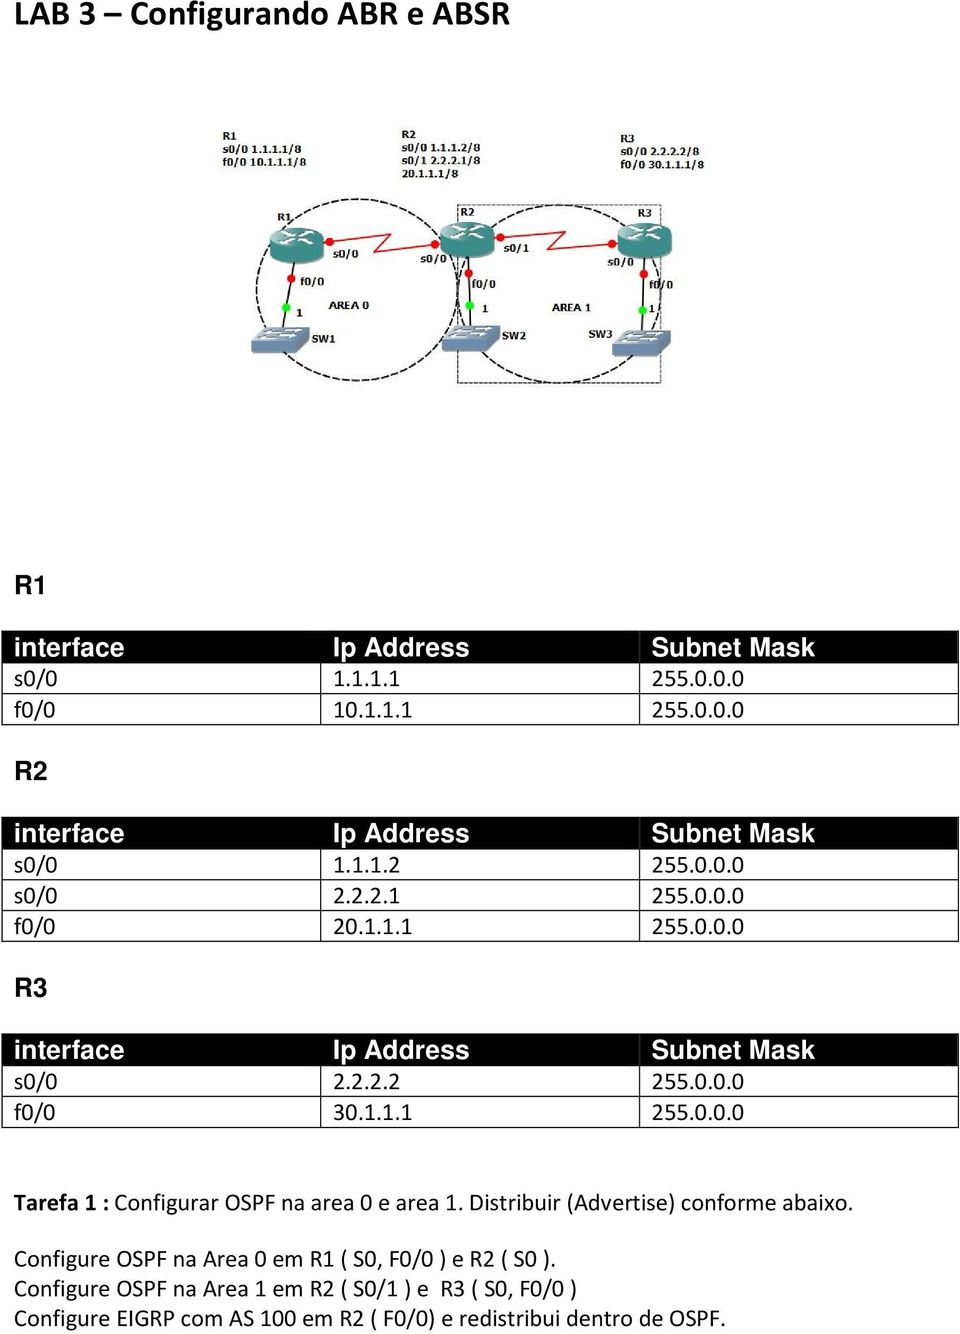 Distribuir (Advertise) conforme abaixo. Configure OSPF na Area 0 em R1 ( S0, F0/0 ) e R2 ( S0 ).